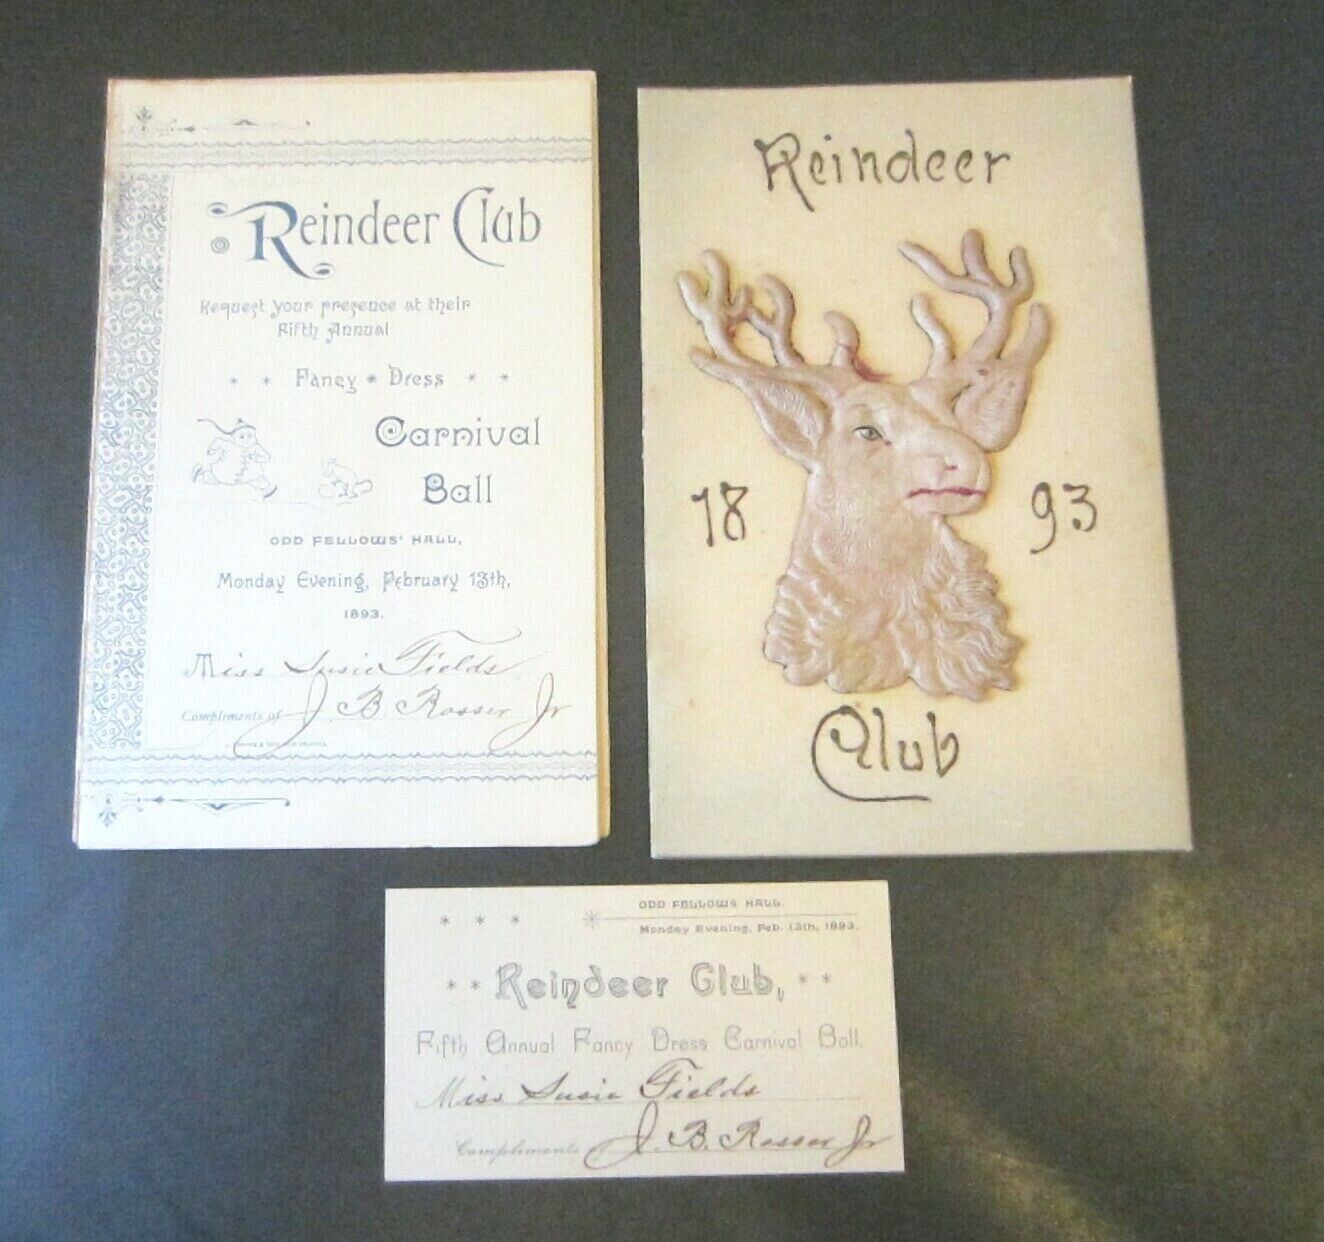 Lot Reindeer Club 1893 Mardi Gras Ball Card- Invitation & Admit Card New Orleans